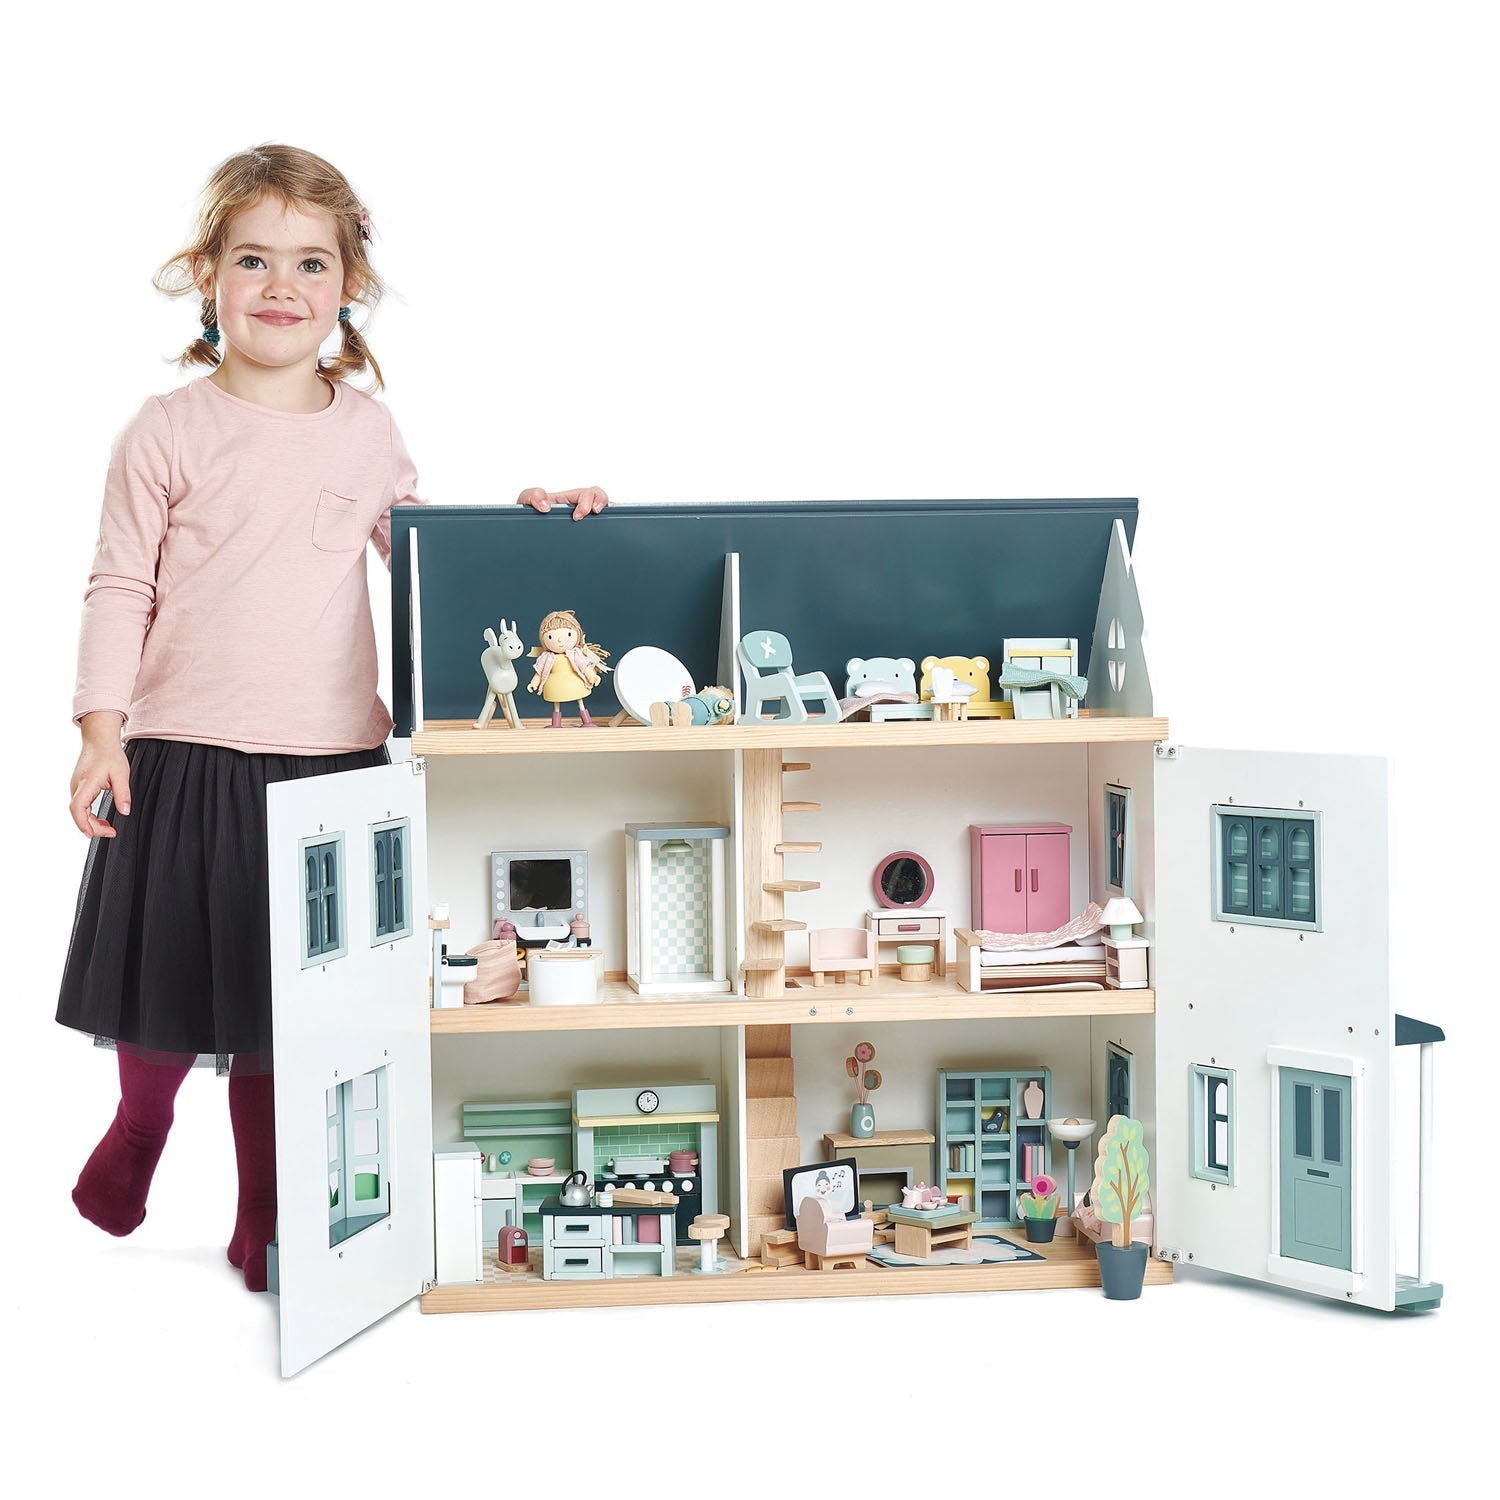 Dolls House Children's Room Furniture by Tender Leaf Toys